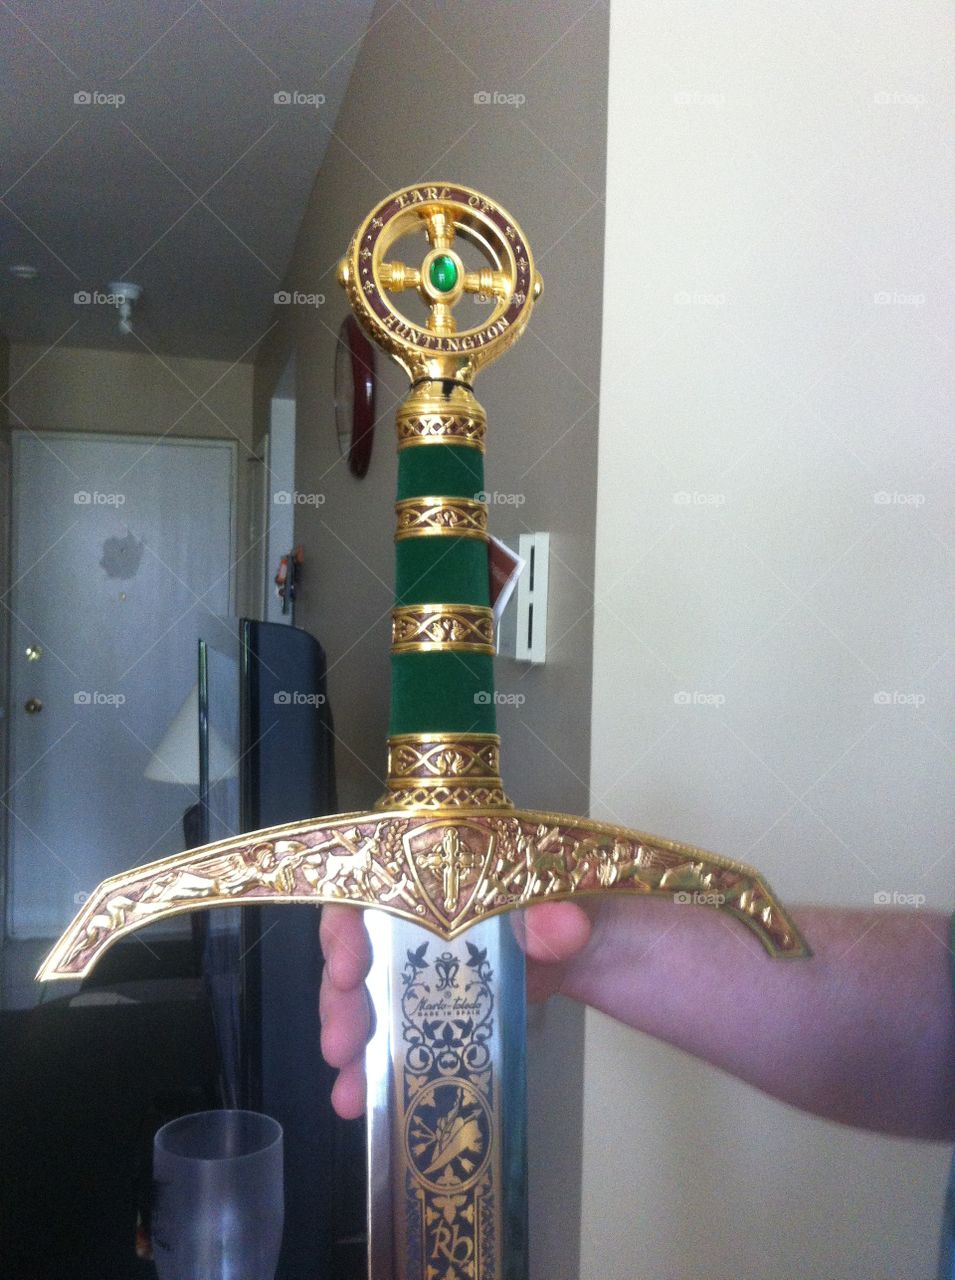 The Robin Hood Sword